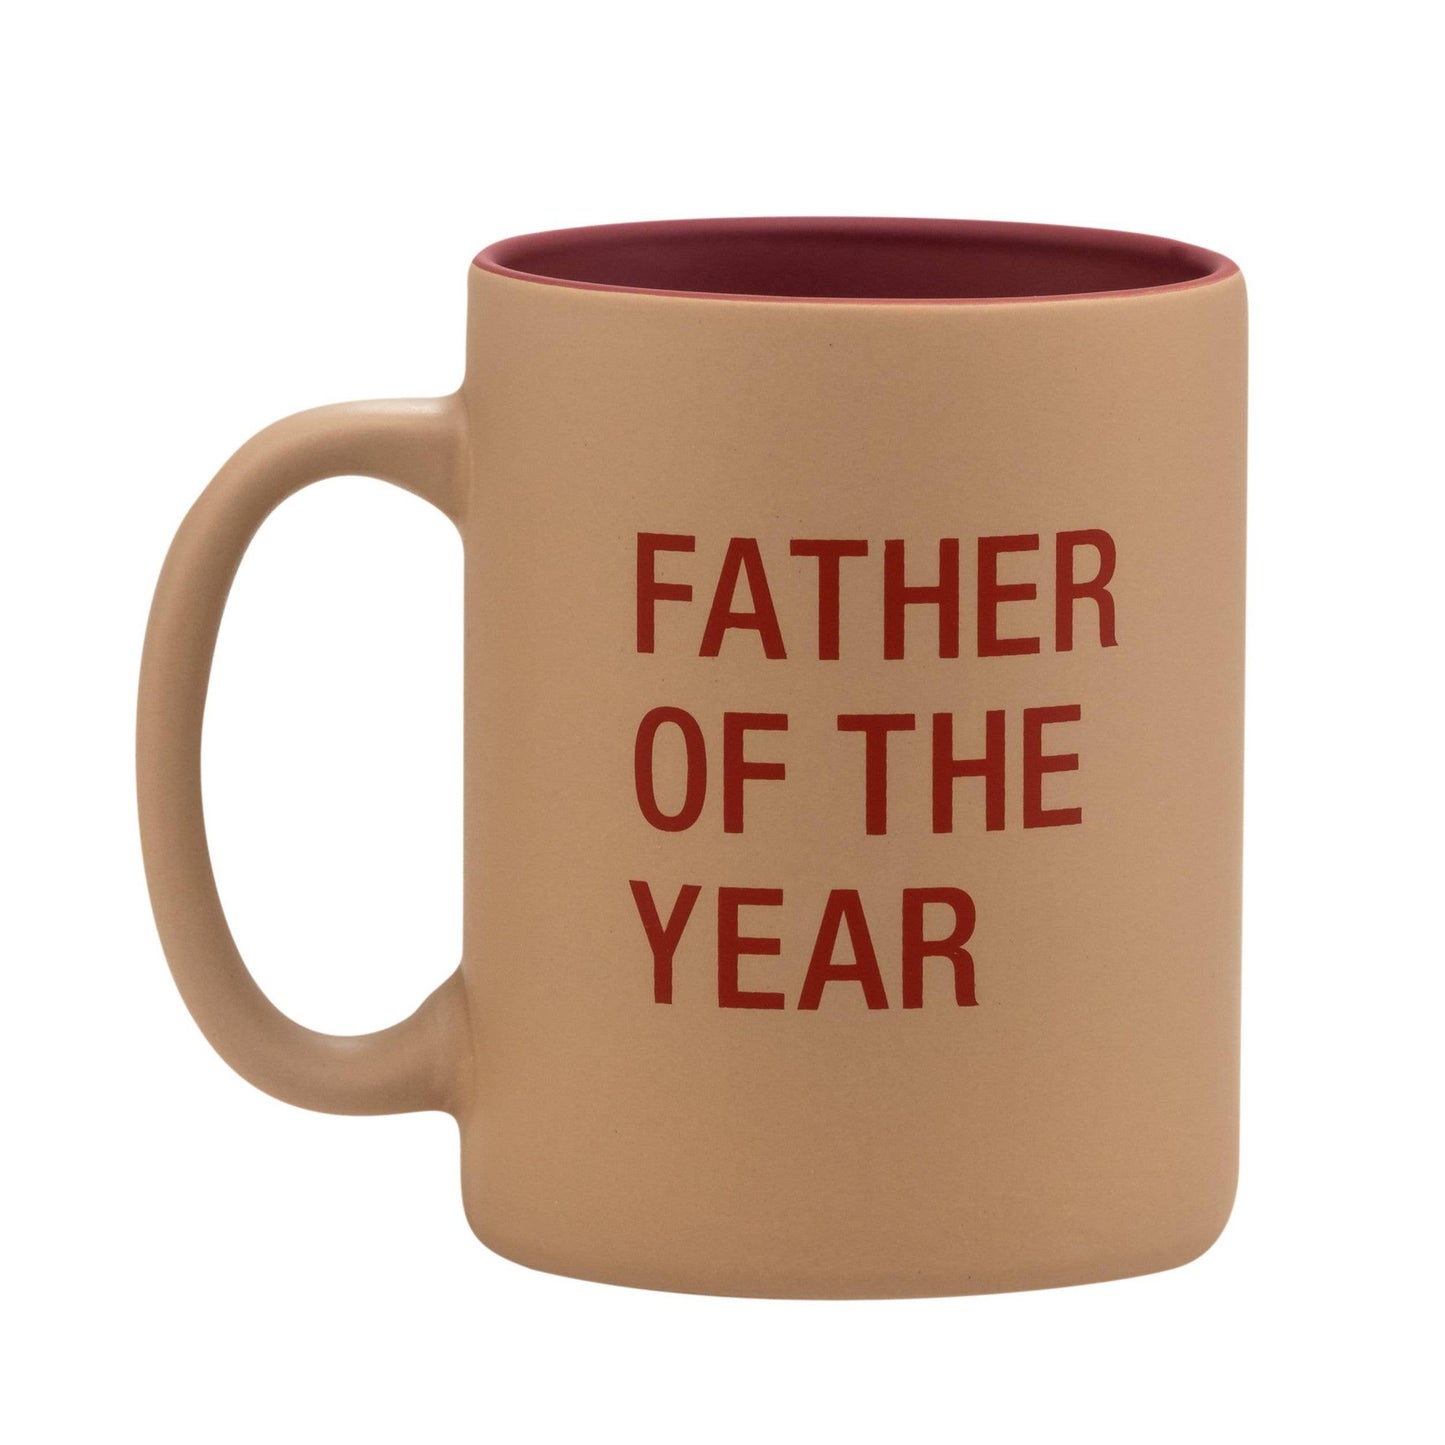 Father of the Year Mug | Ceramic Coffee Tea Mug | 13.5 oz